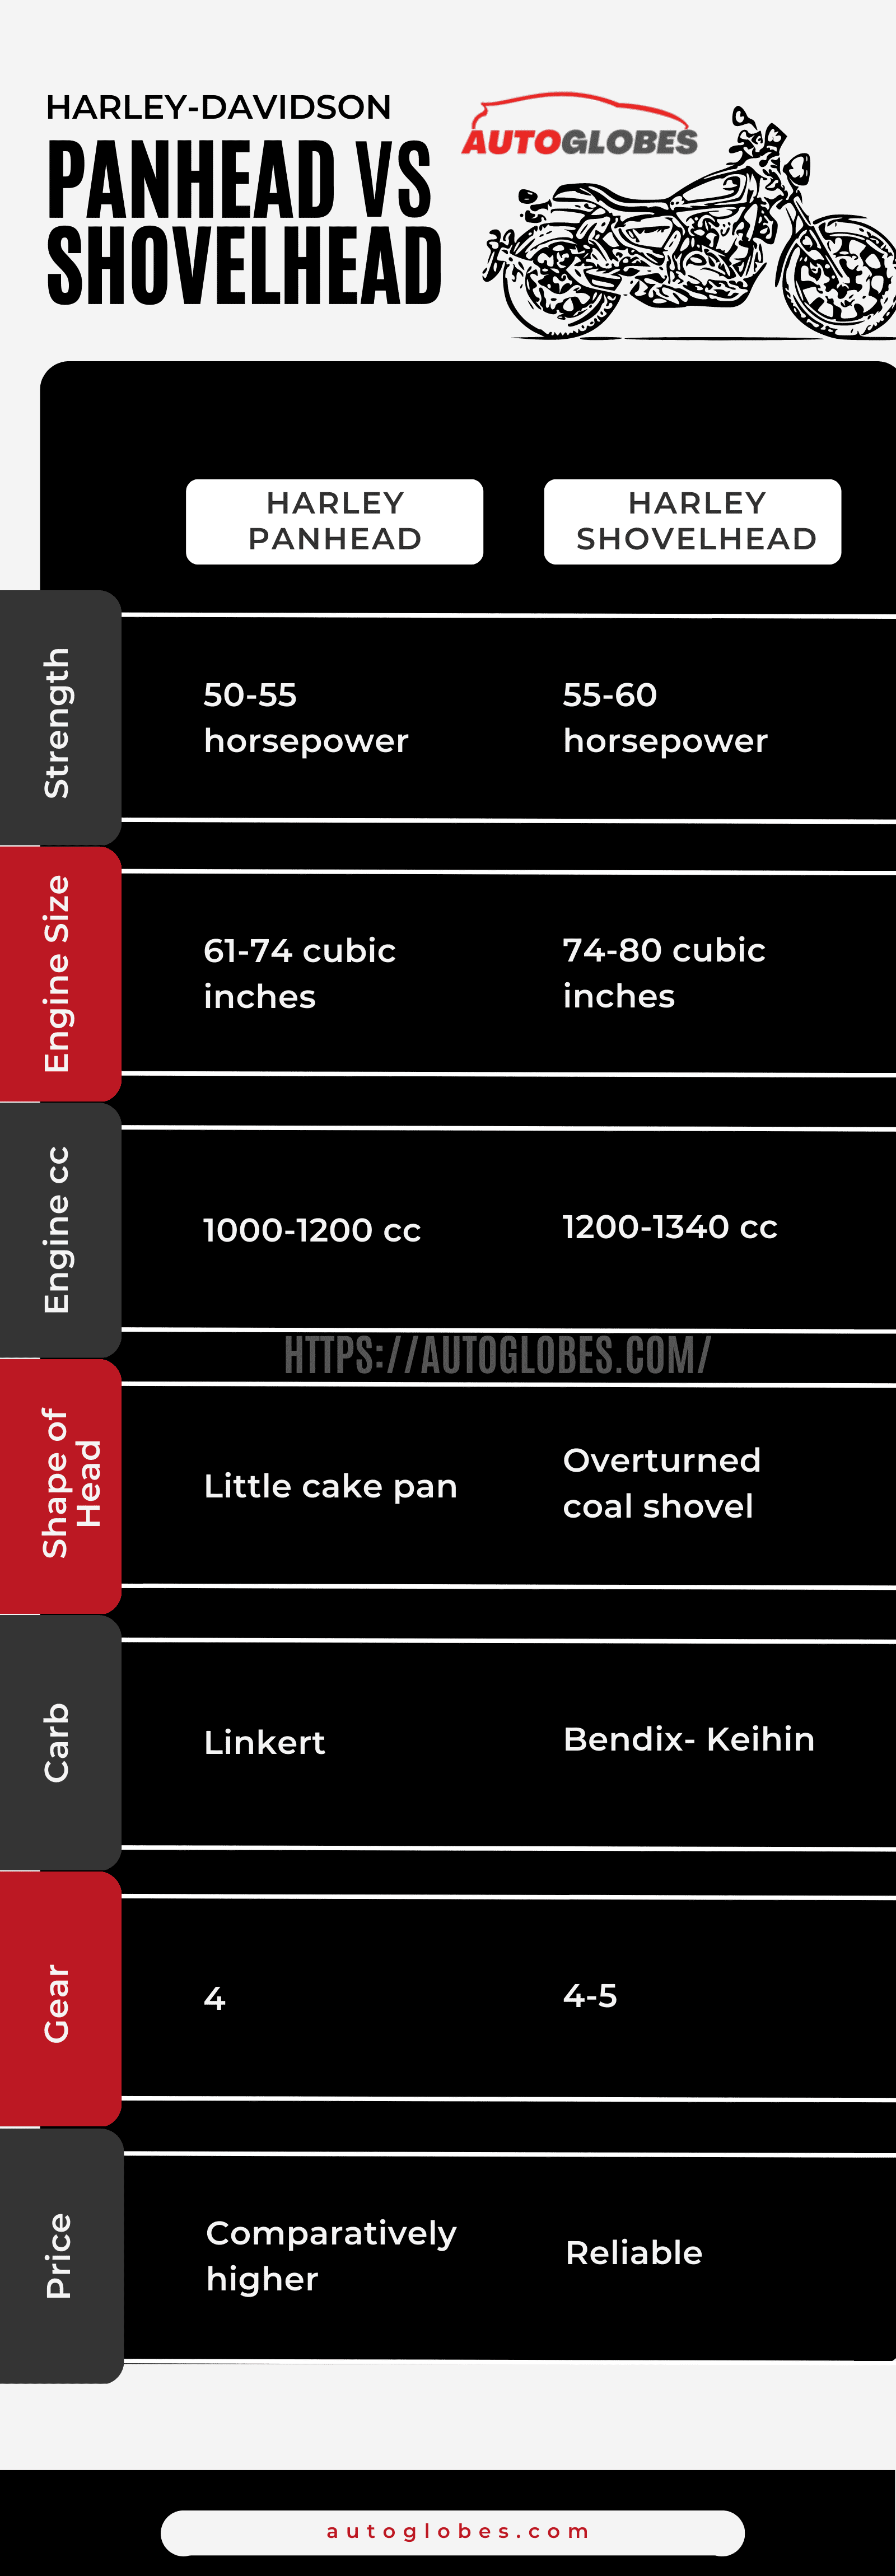 Harley Panhead Vs Shovelhead infographic